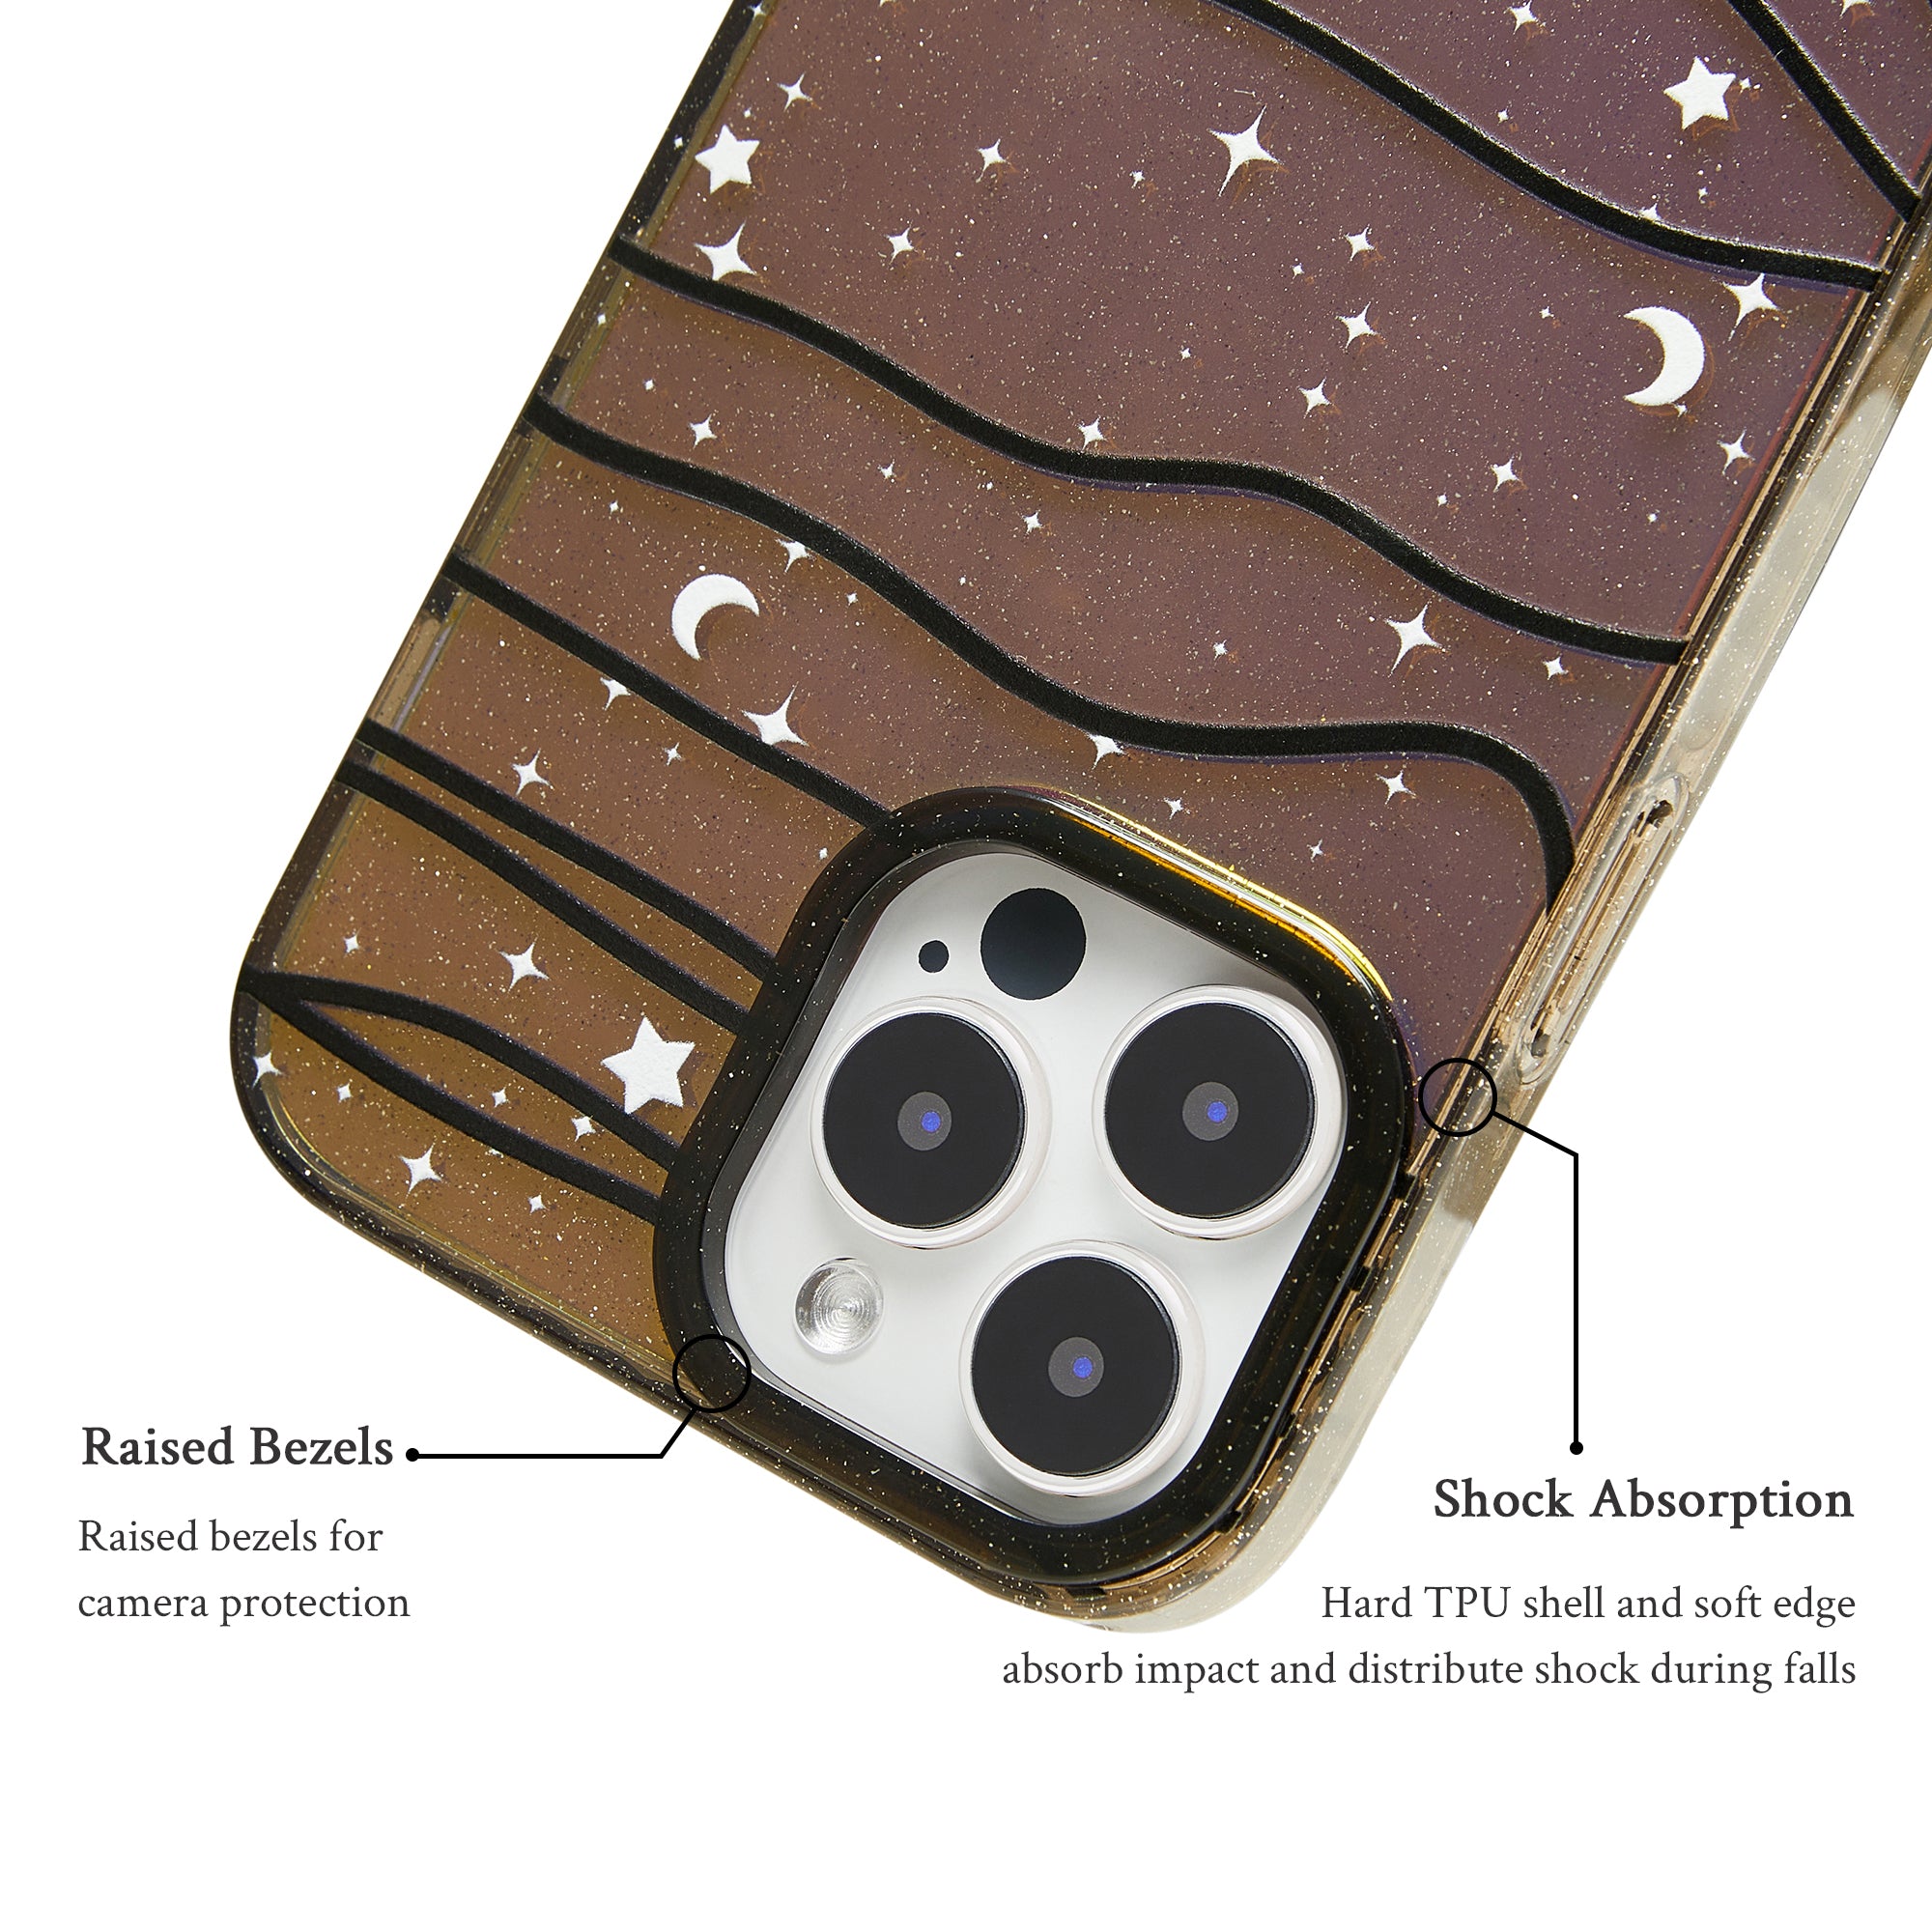 Glittery Starry Phone Case